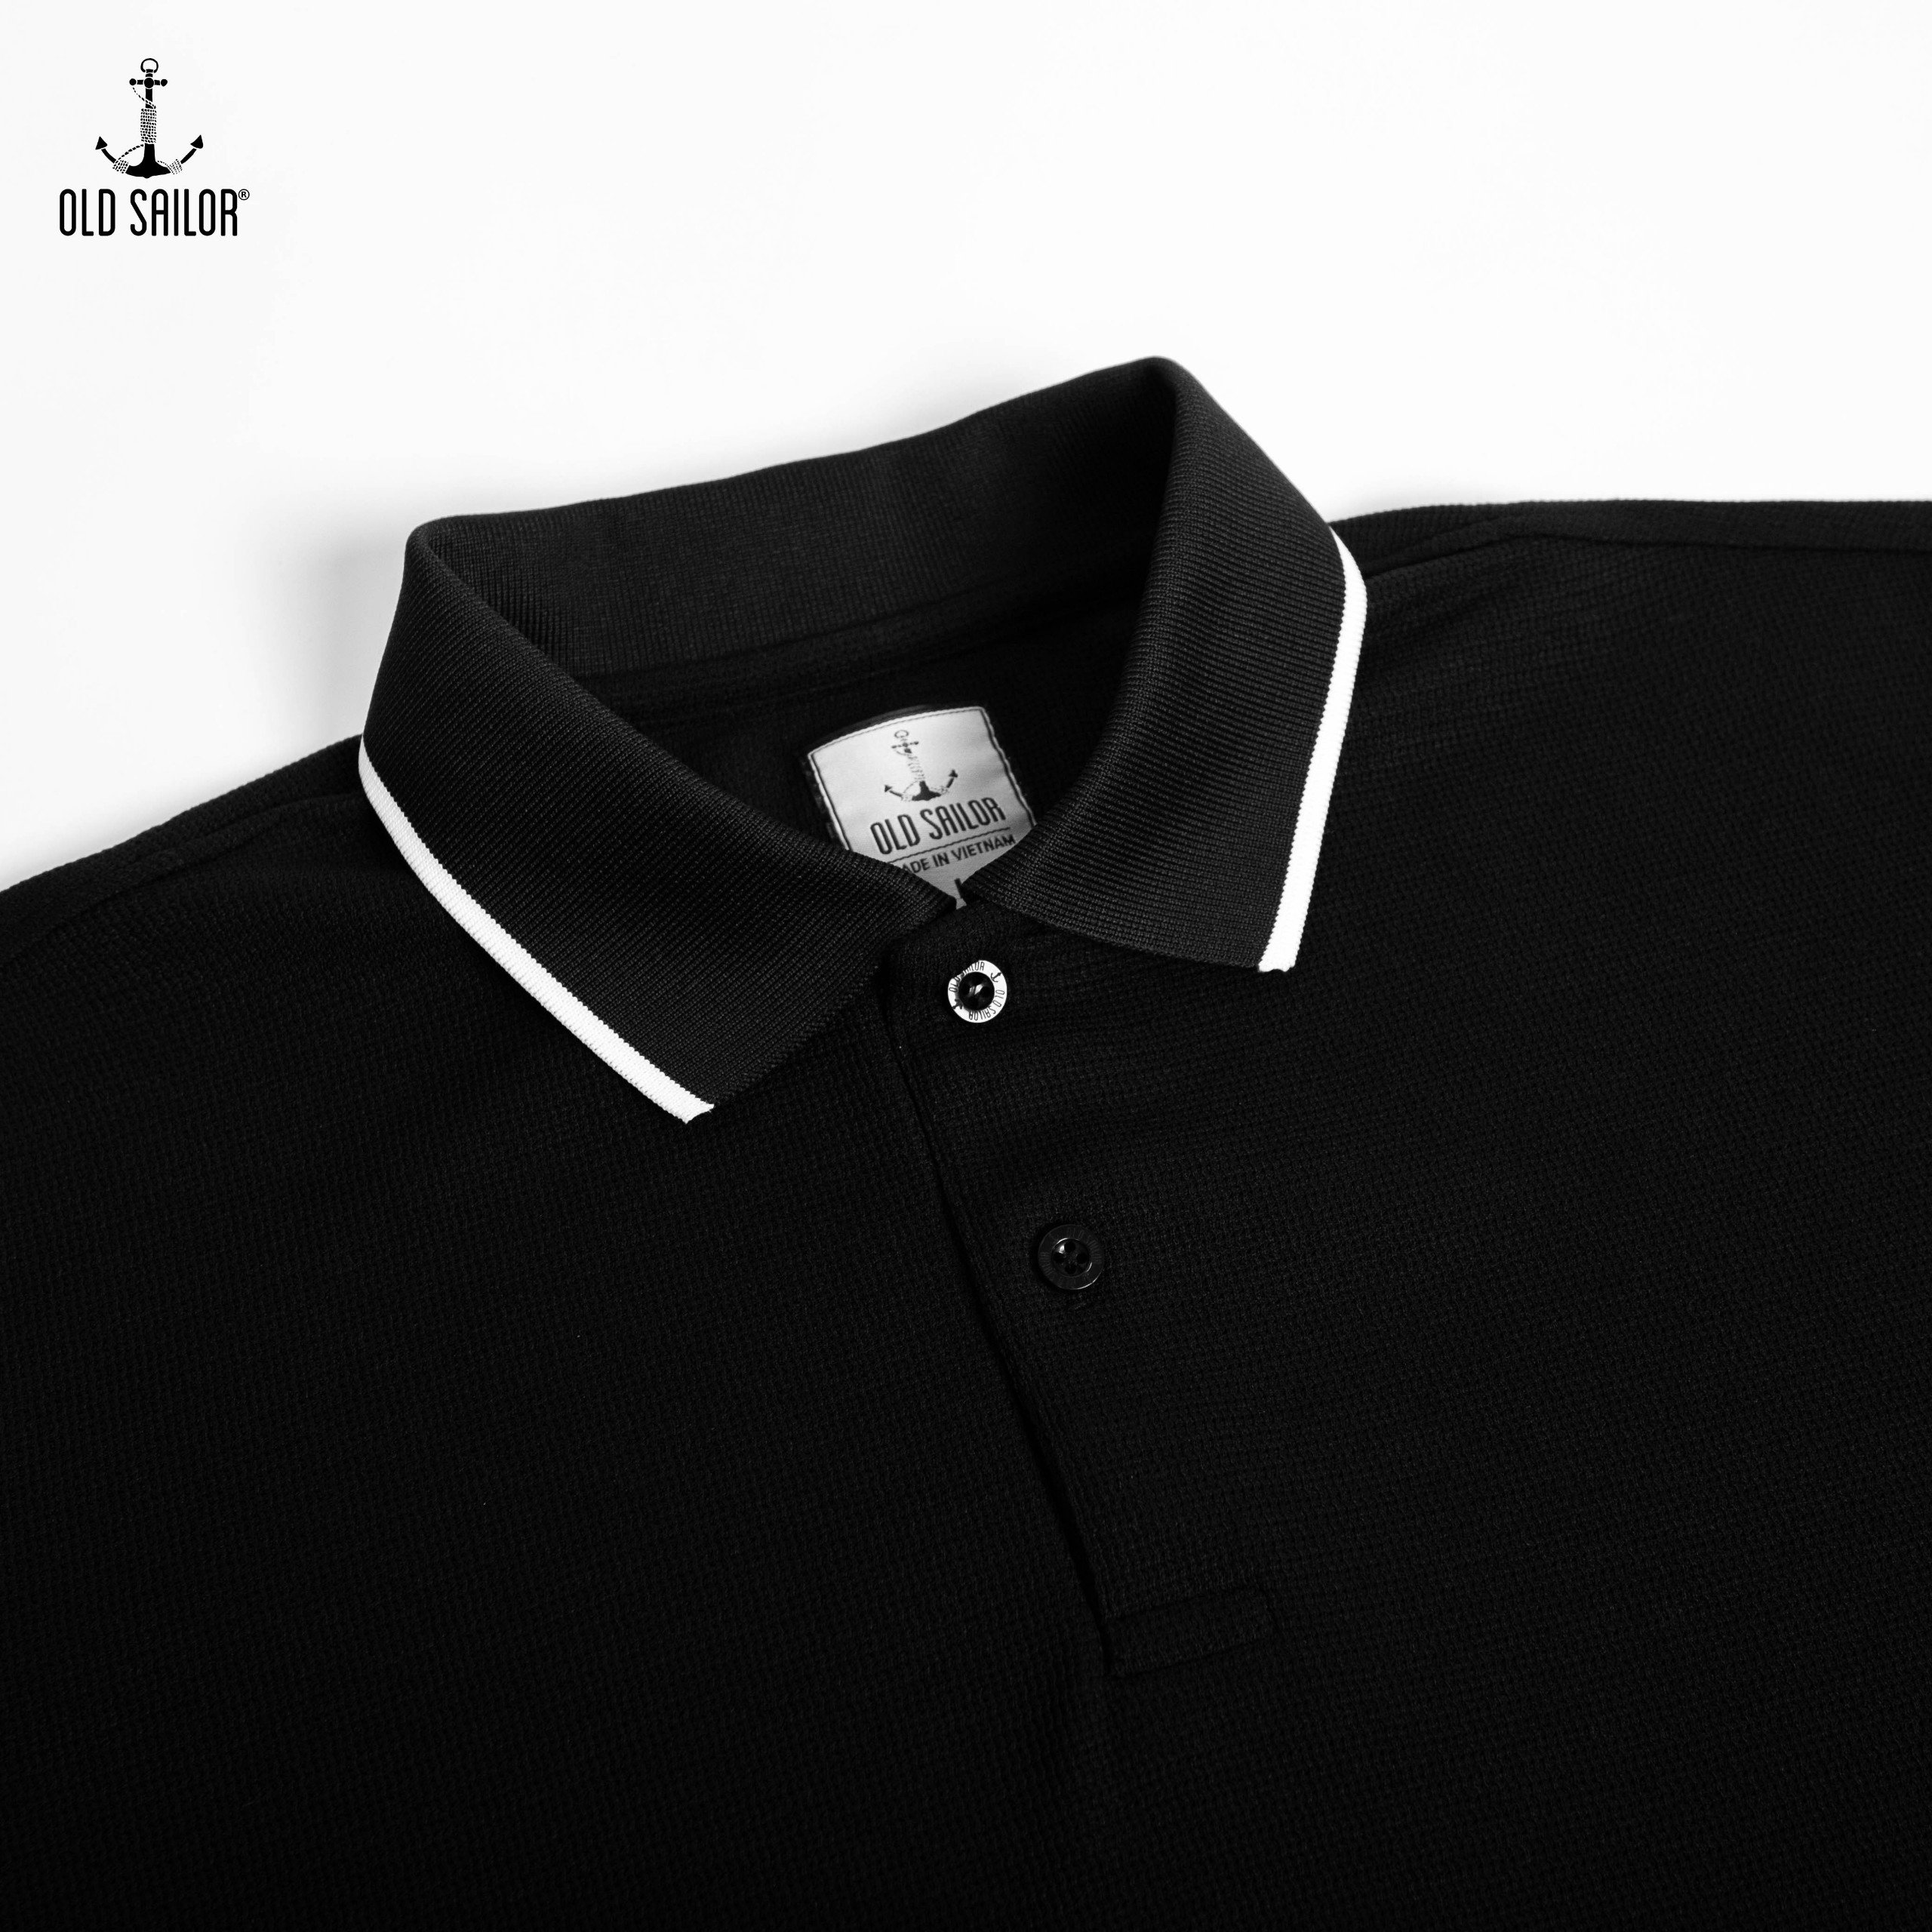 Áo polo vải dệt kim nam Old Sailor - Black - PLDE33006 - đen - Big size upto 5XL